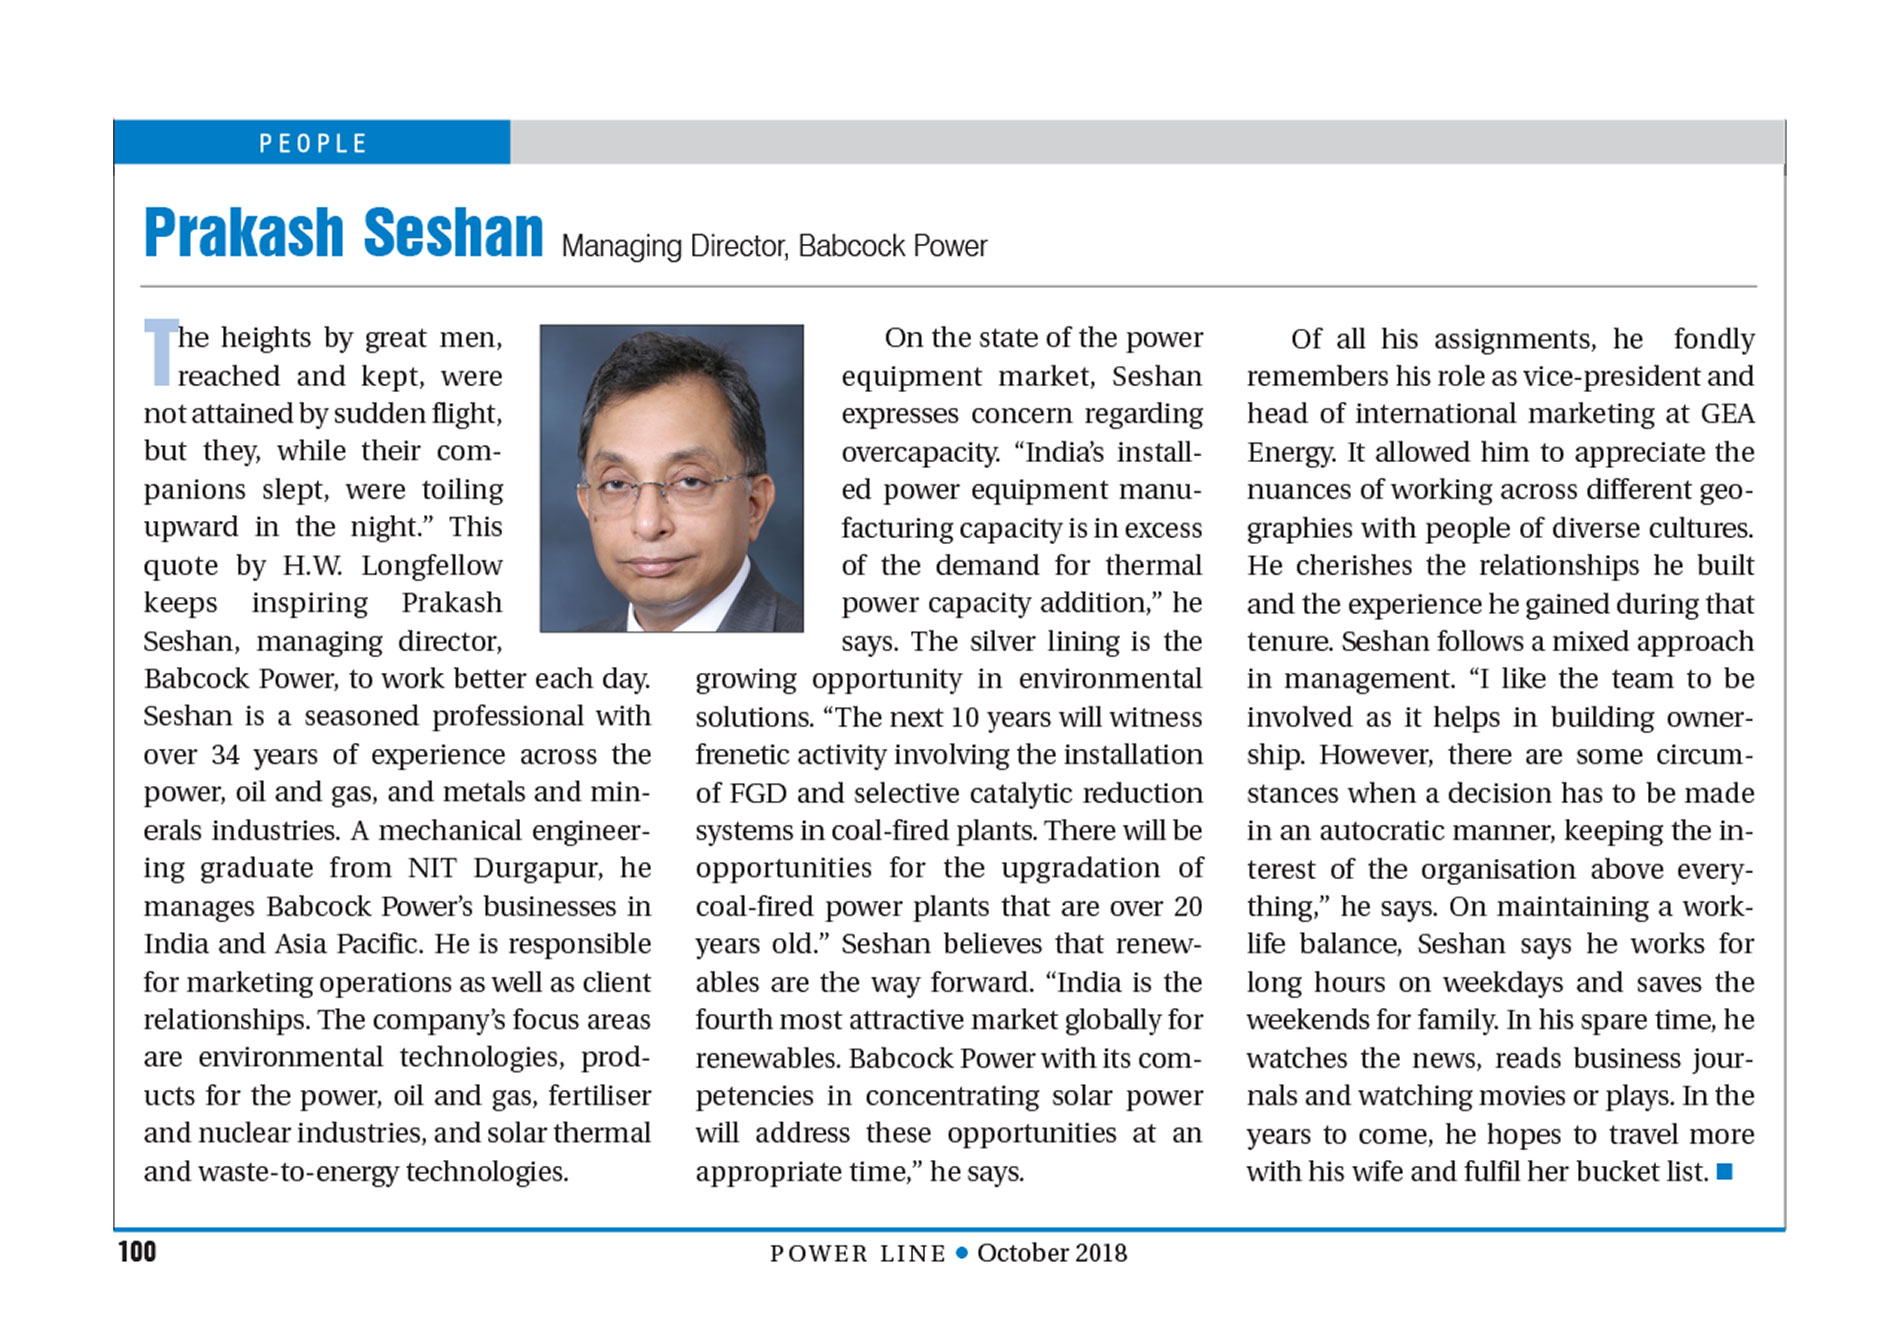 PowerLine Magazine profile of Babcock Power APAC Pvt. Ldt. Managing Director Prakash Seshan